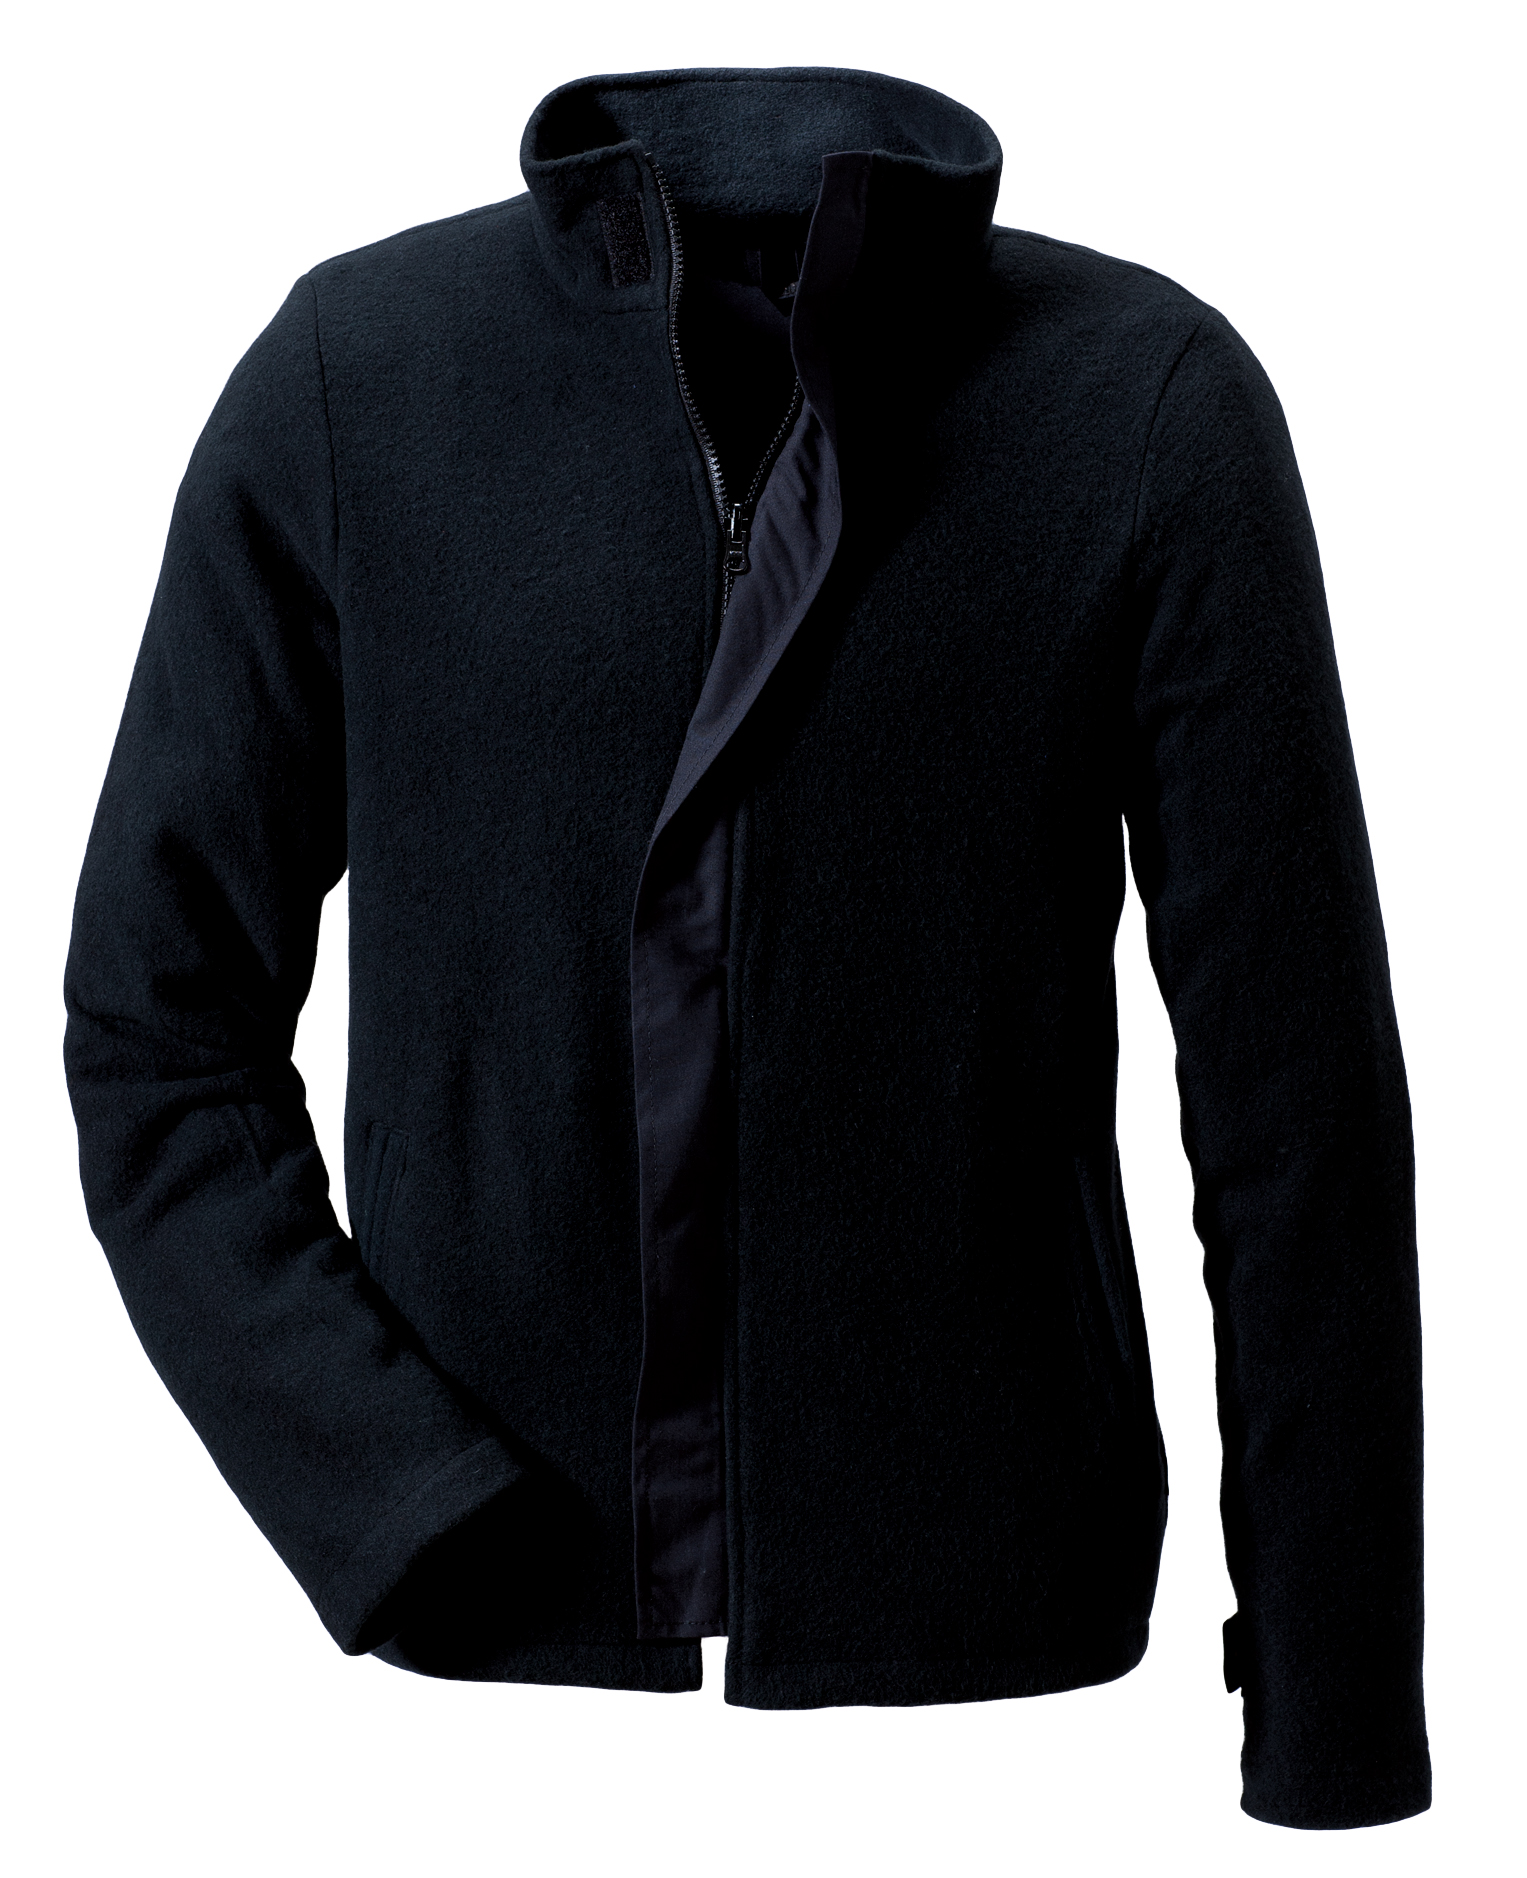 ROFA-Kälteschutz,Winter-Fleece-Arbeits-Berufs-Jacke, schwarz
